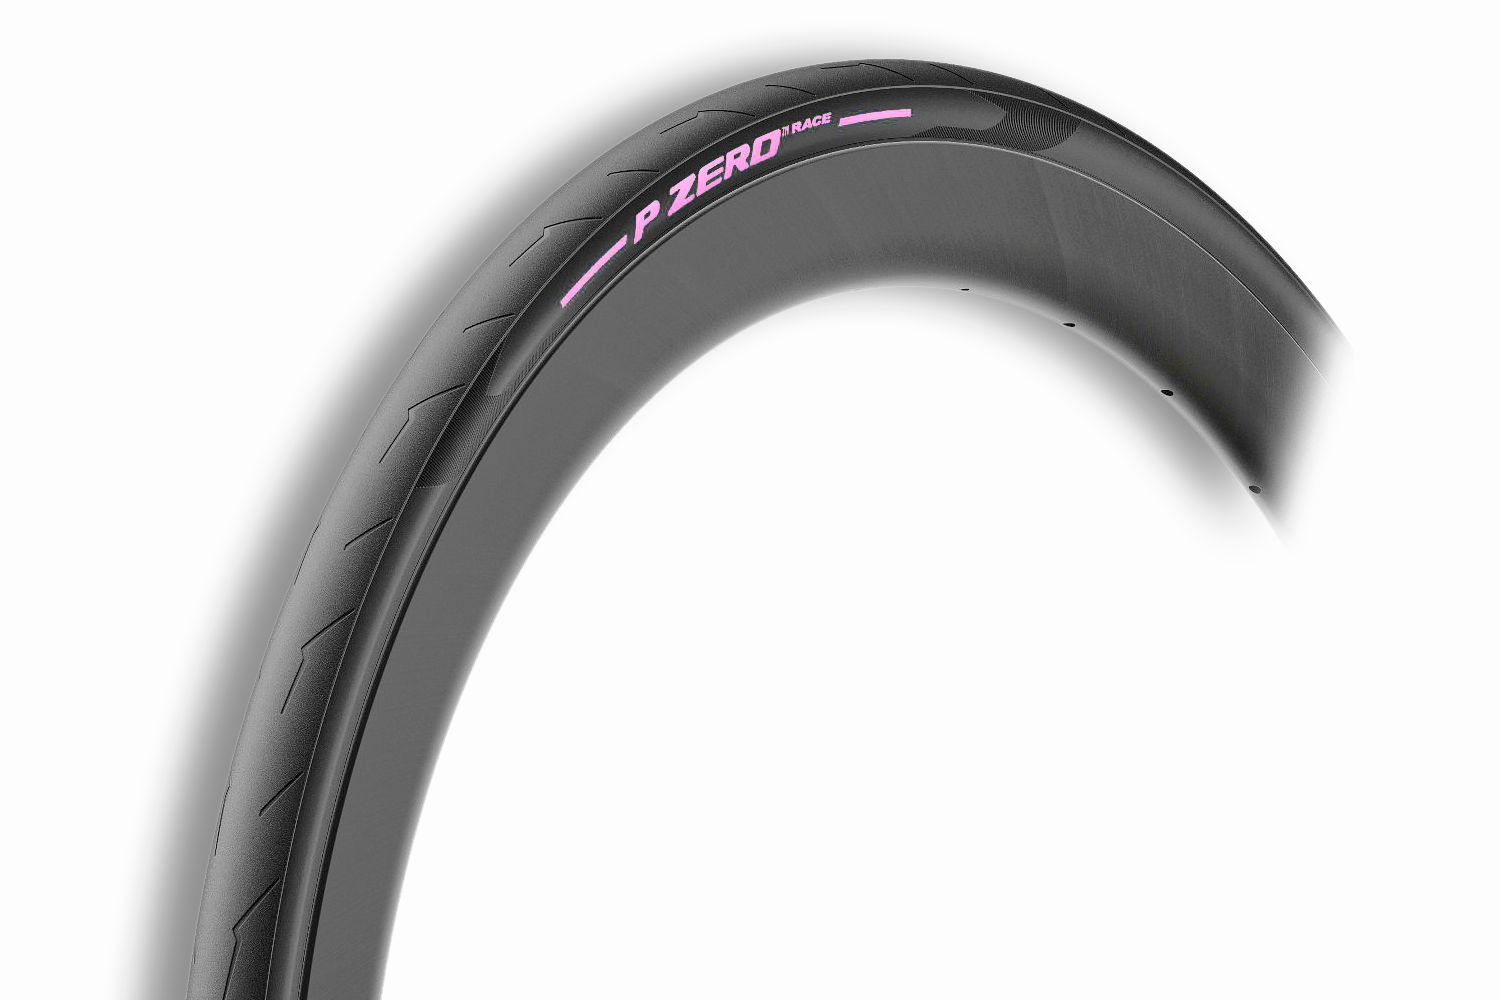  Покрышка для велосипеда Pirelli P Zero Race 700 розовый 28мм.